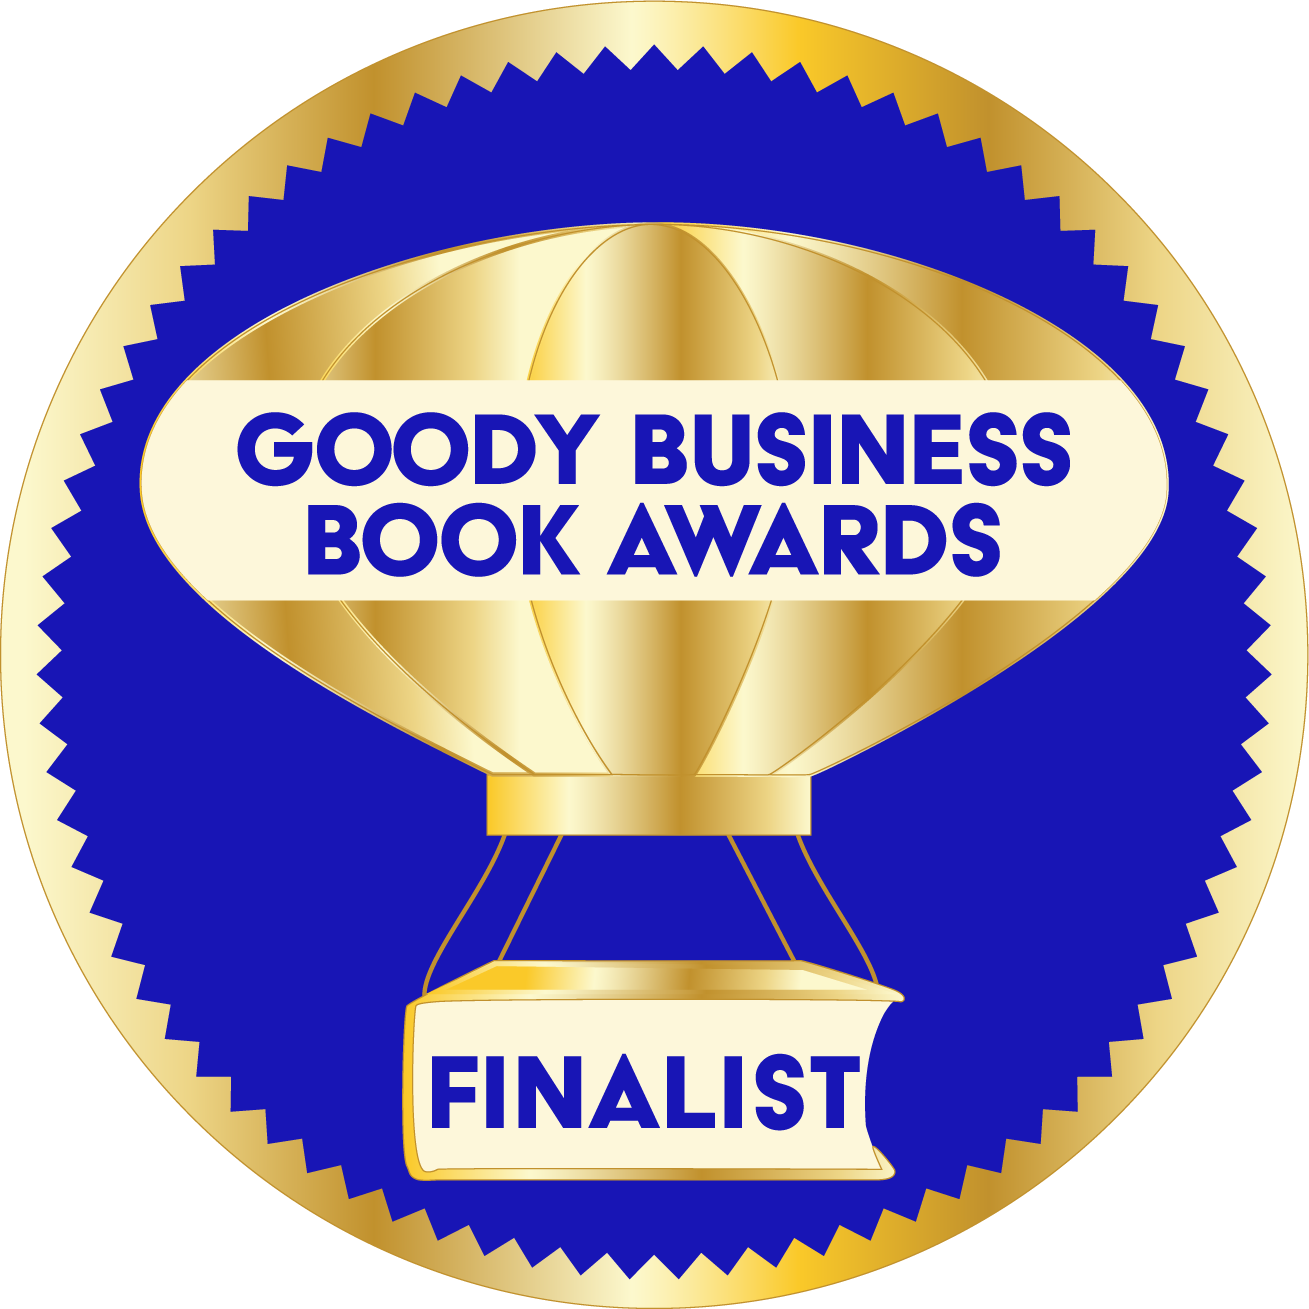 Goody Business Books Award Logo - Finalist